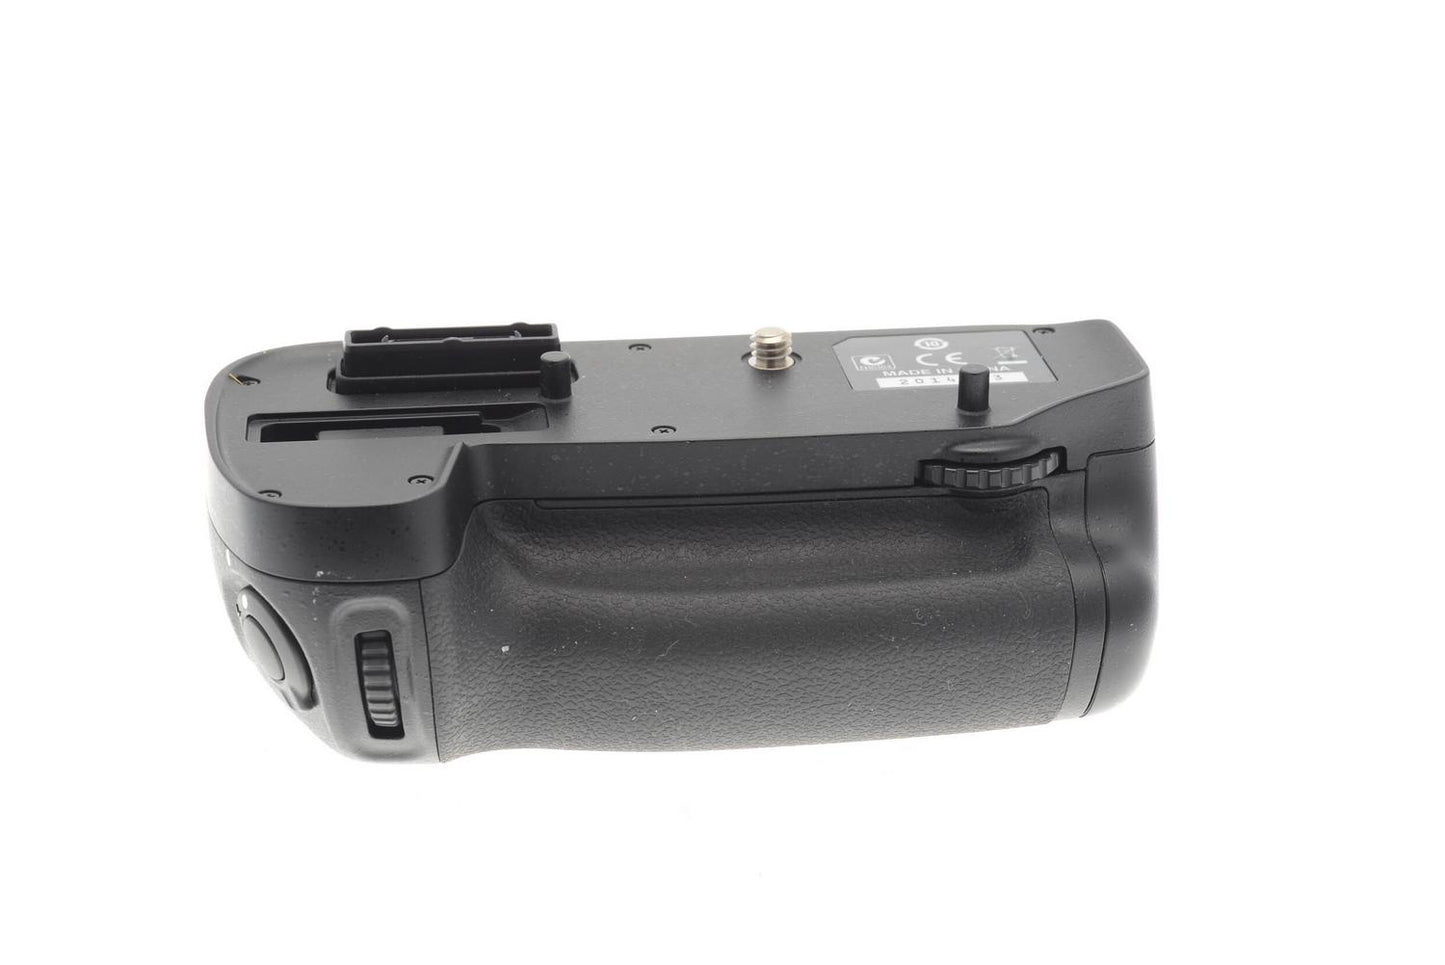 Nikon MB-D15 Multi-Power Battery Pack - Accessory